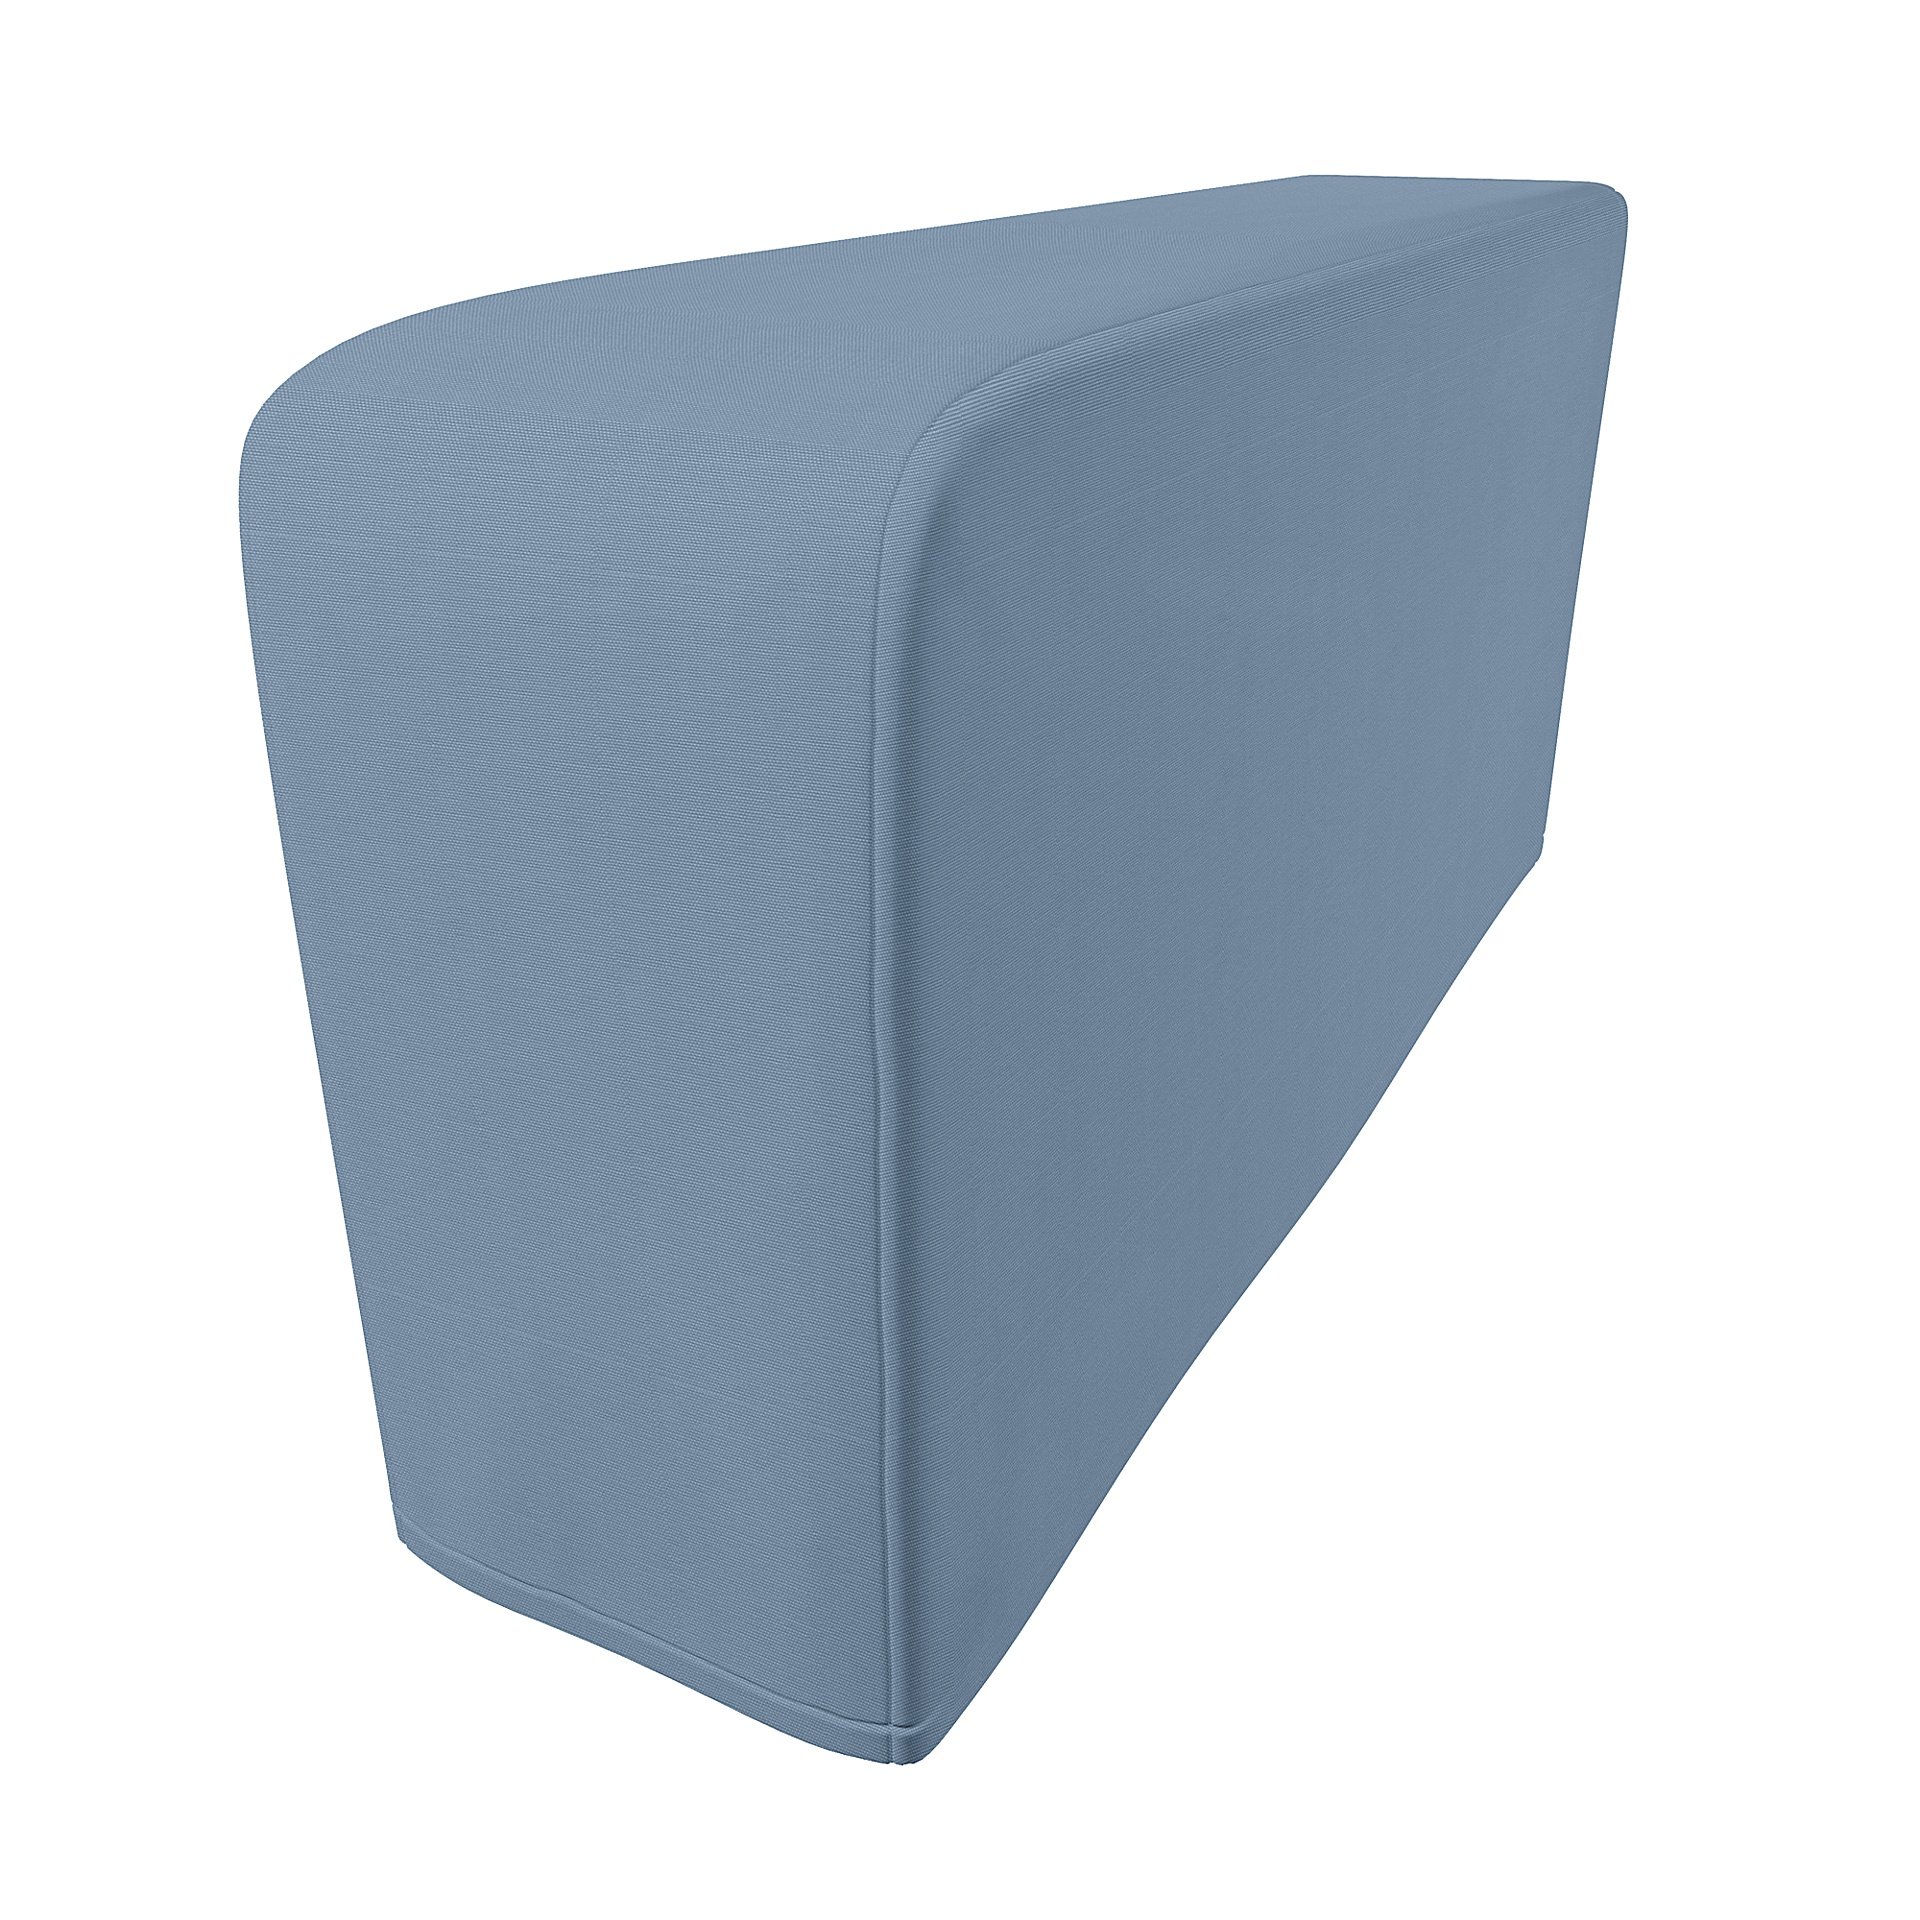 IKEA - Klippan Armrest Protectors (One pair), Dusty Blue, Cotton - Bemz